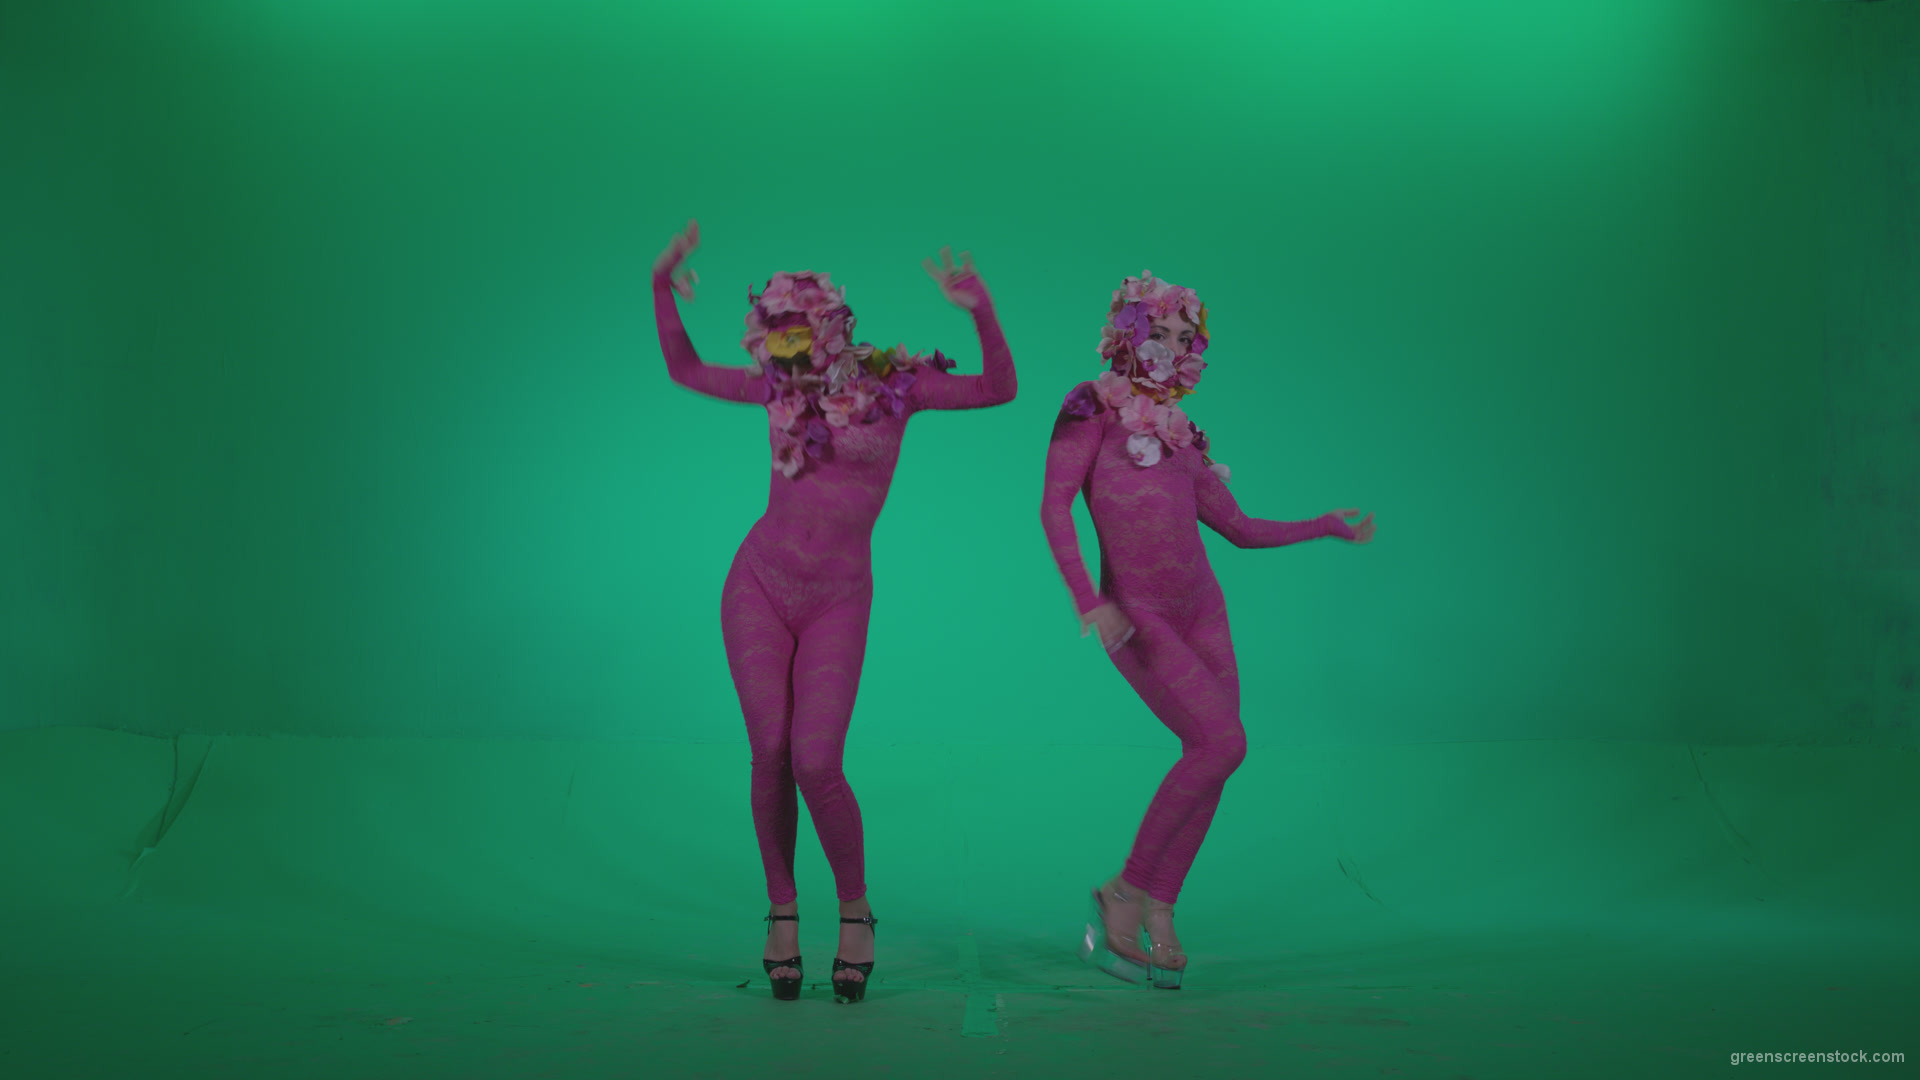 Go-go-Dancer-Pink-flowers-f2-Green-Screen-Video-Footage_007 Green Screen Stock